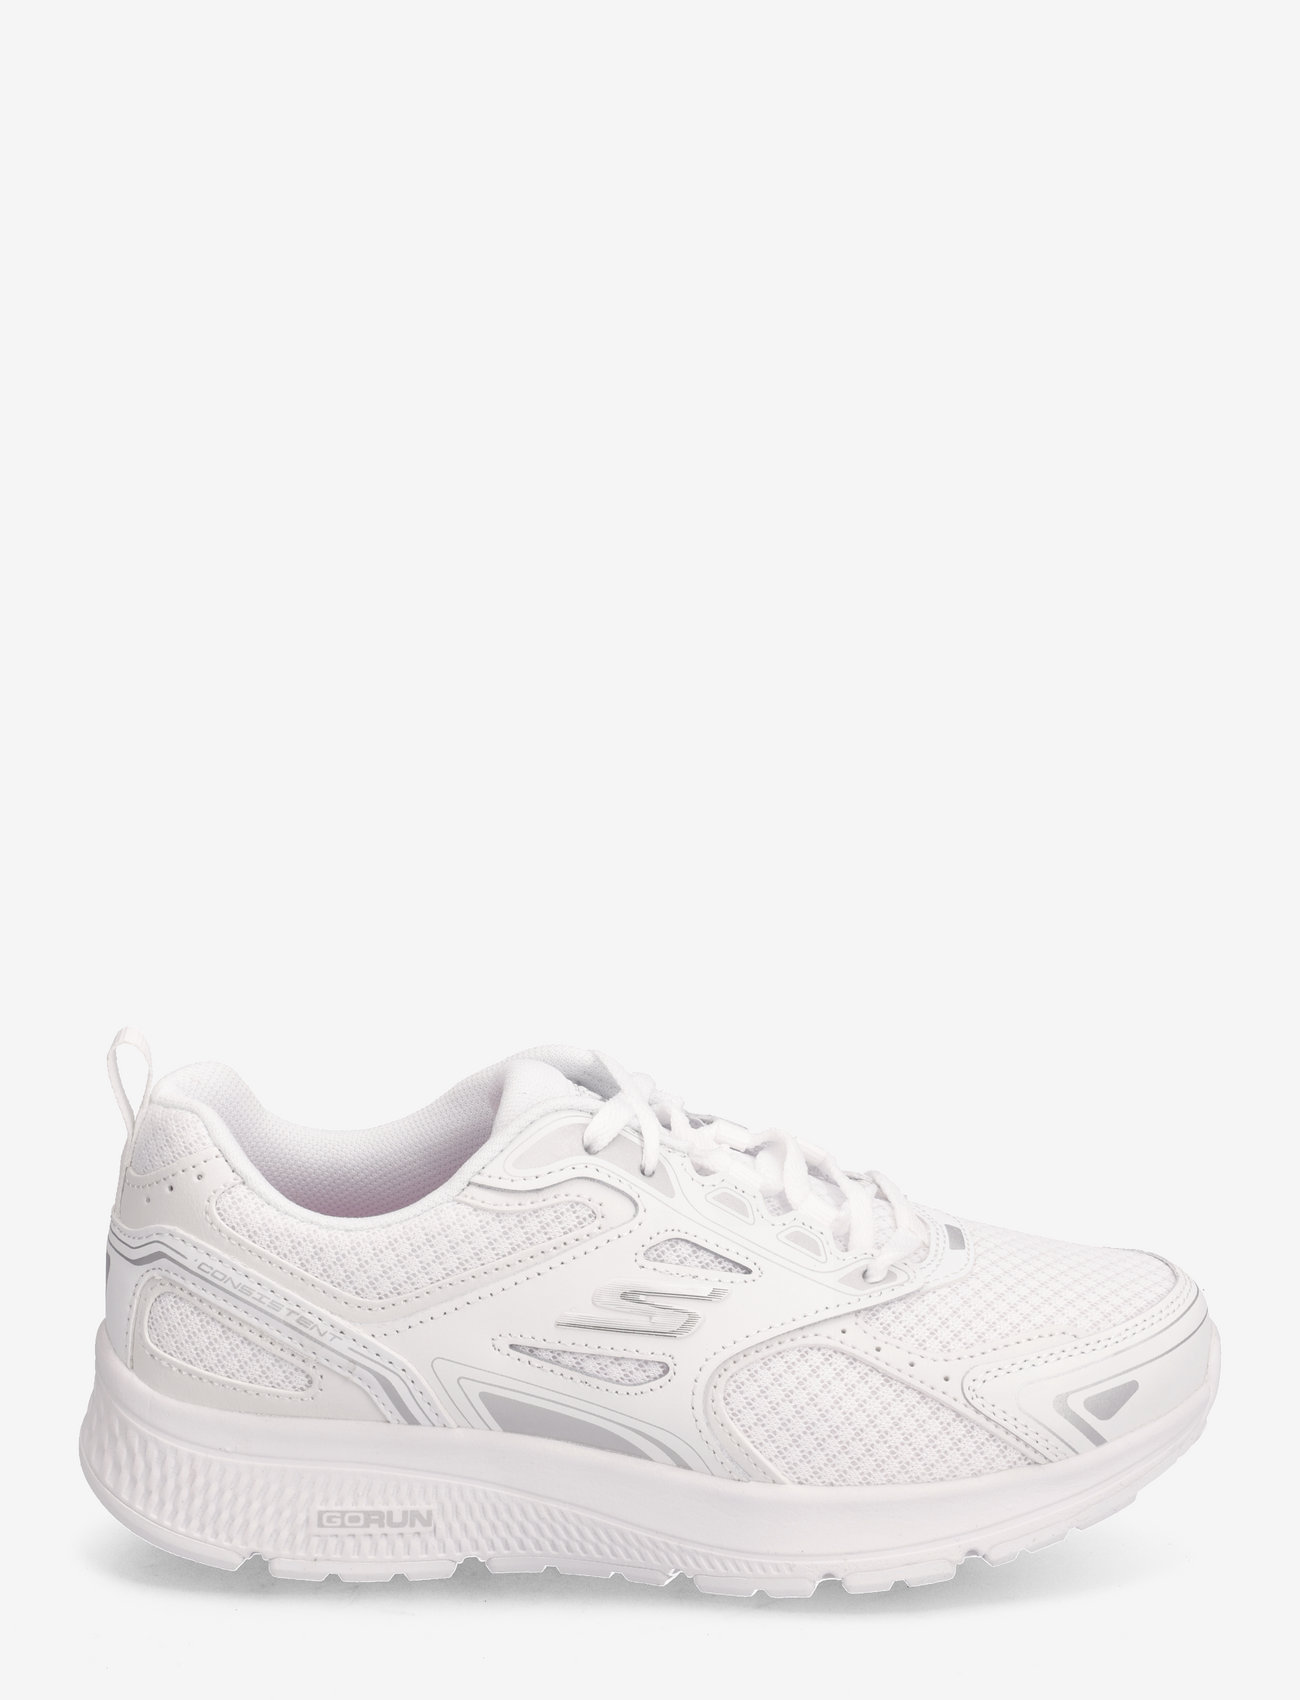 Skechers - Womens Go Run Consistent - sneakers - wsl white silver - 1